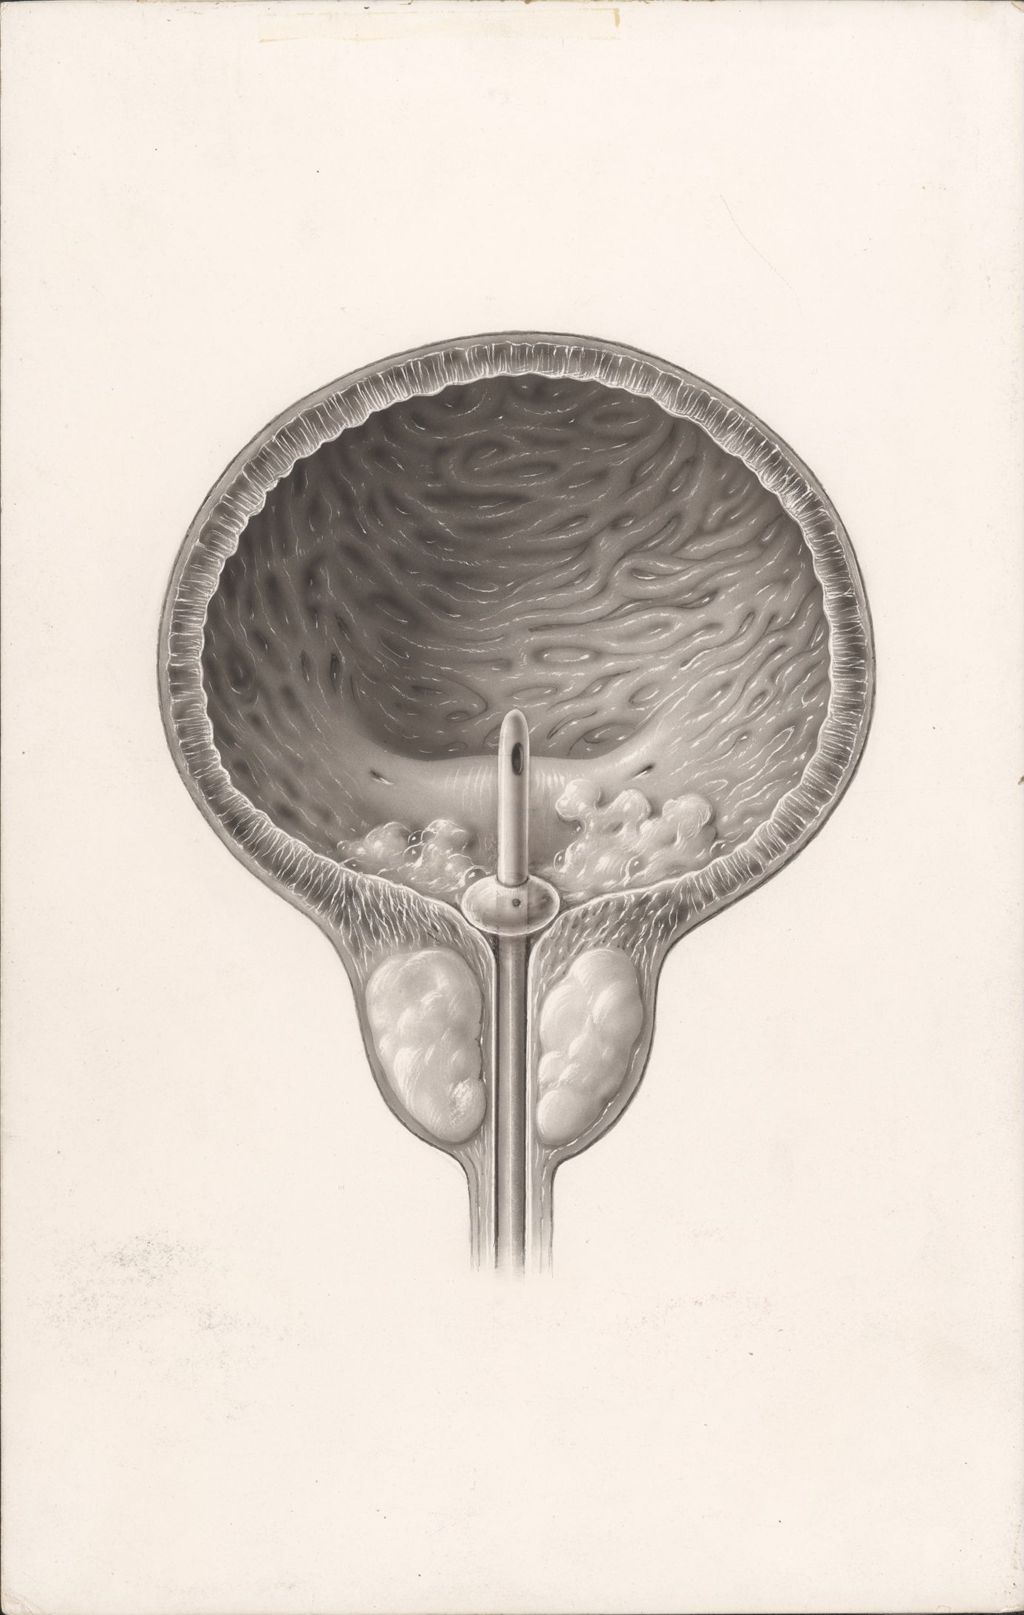 Miniature of Dornavac, Purulent Urologic Condition, Indwelling Urethral Catheter